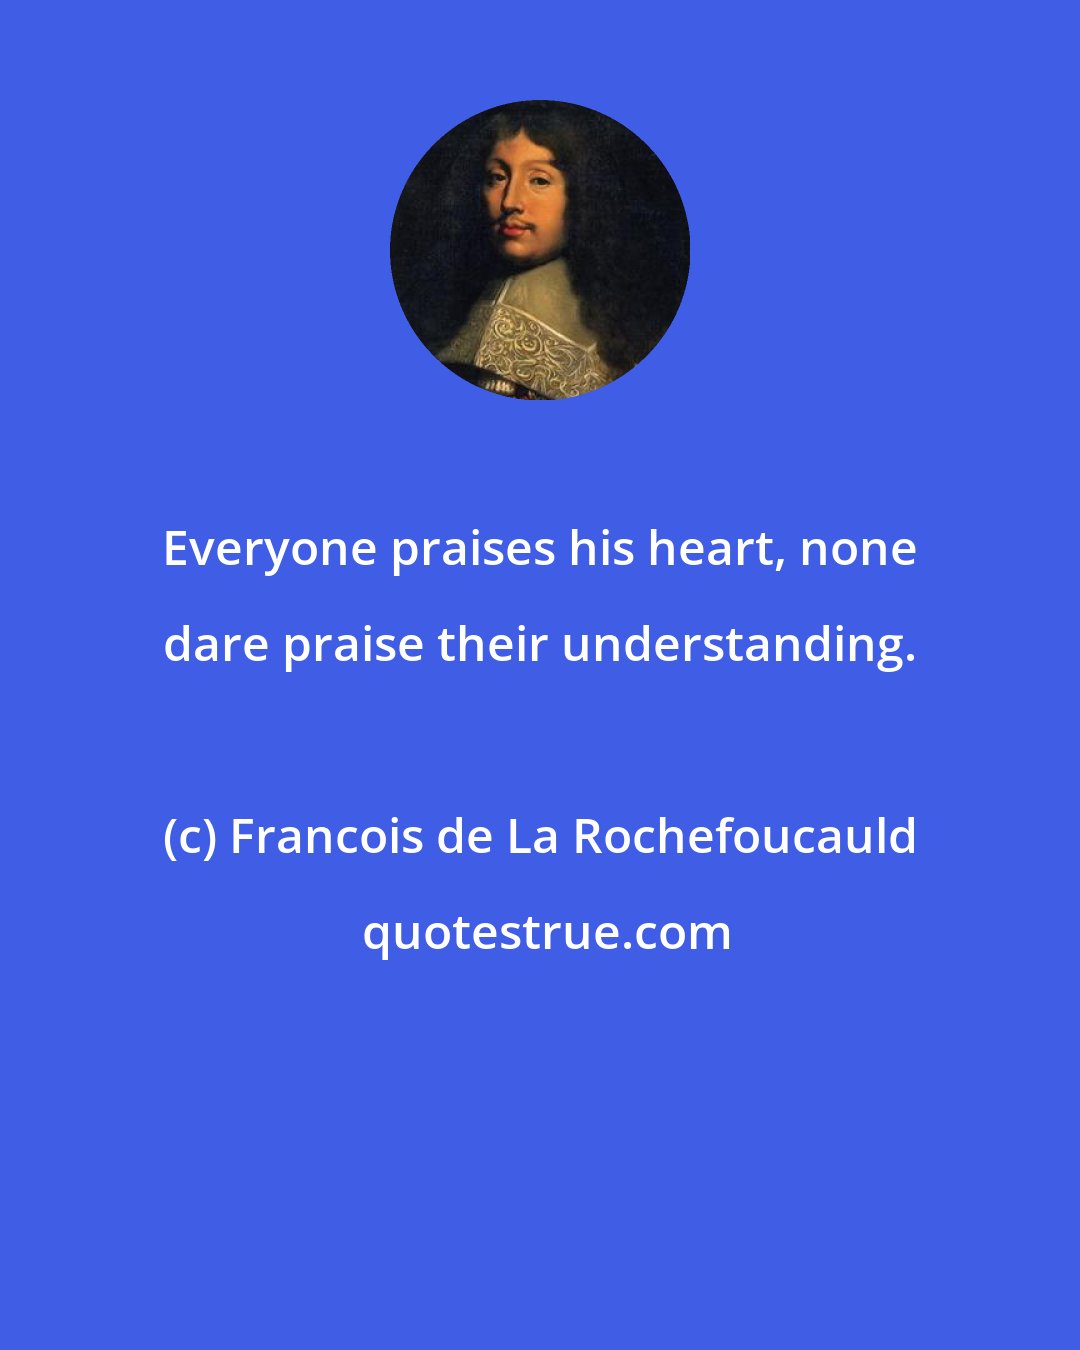 Francois de La Rochefoucauld: Everyone praises his heart, none dare praise their understanding.